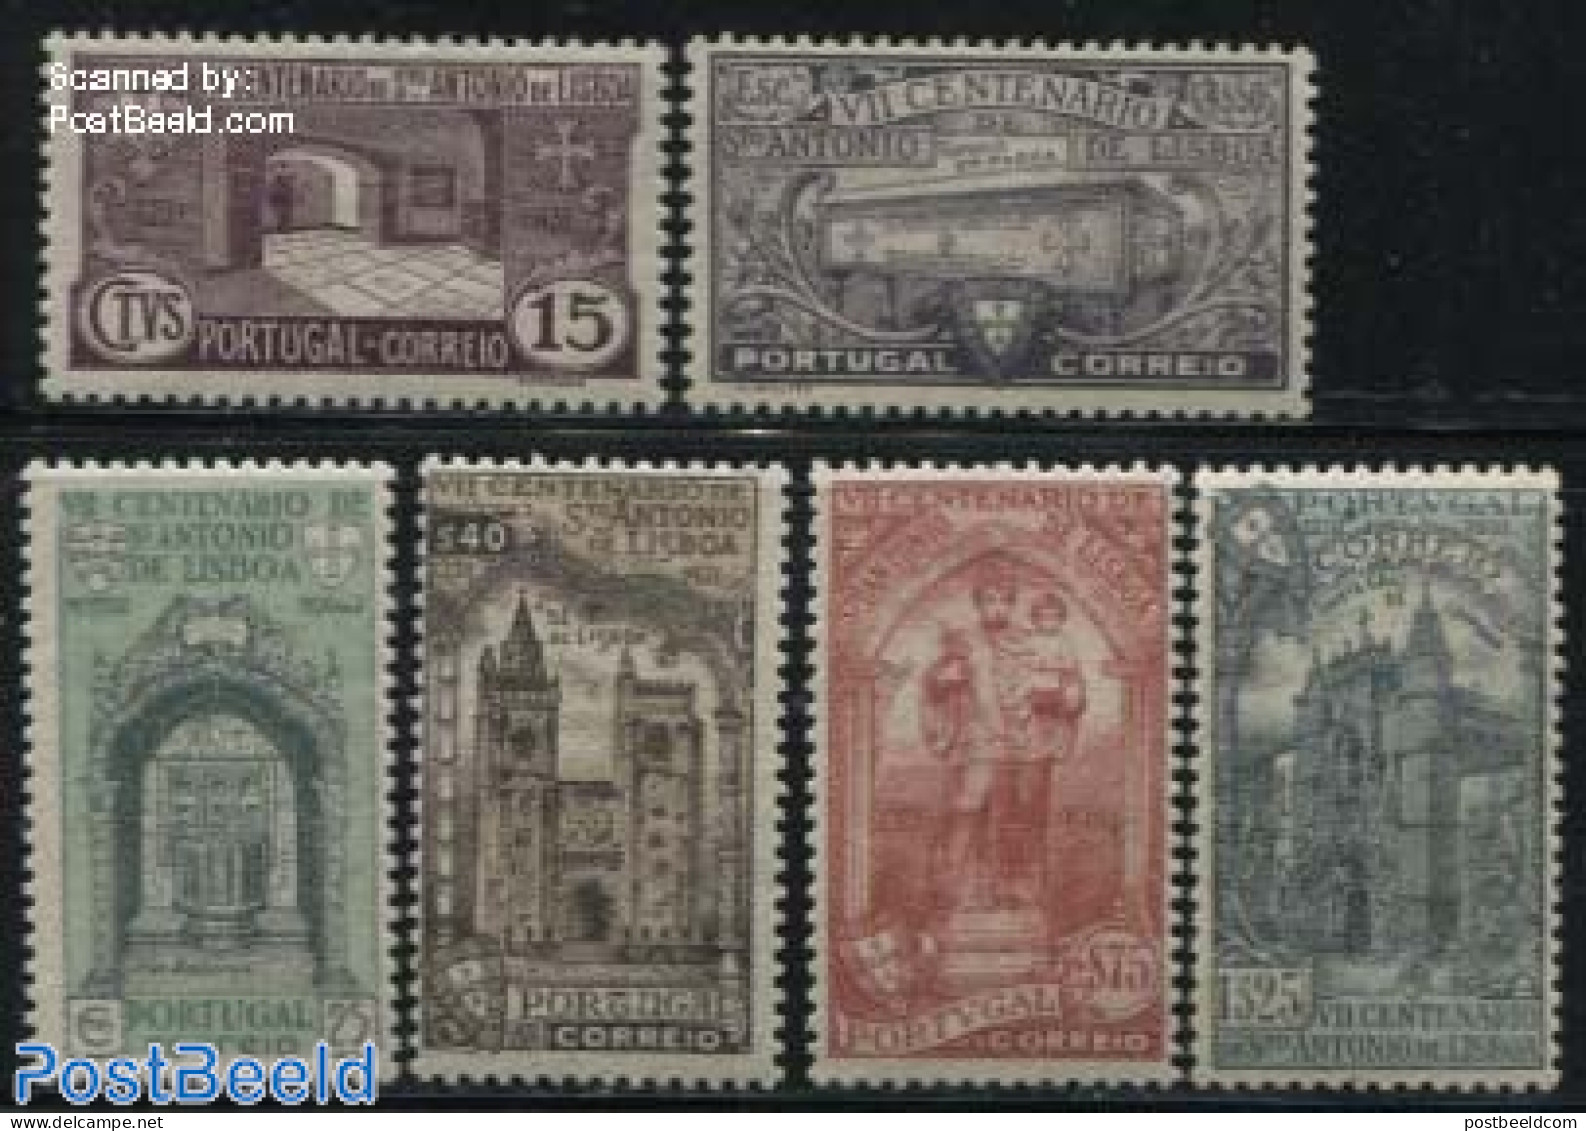 Portugal 1931 St. Antonius Of Padua 6v, Unused (hinged), Religion - Churches, Temples, Mosques, Synagogues - Religion - Nuevos